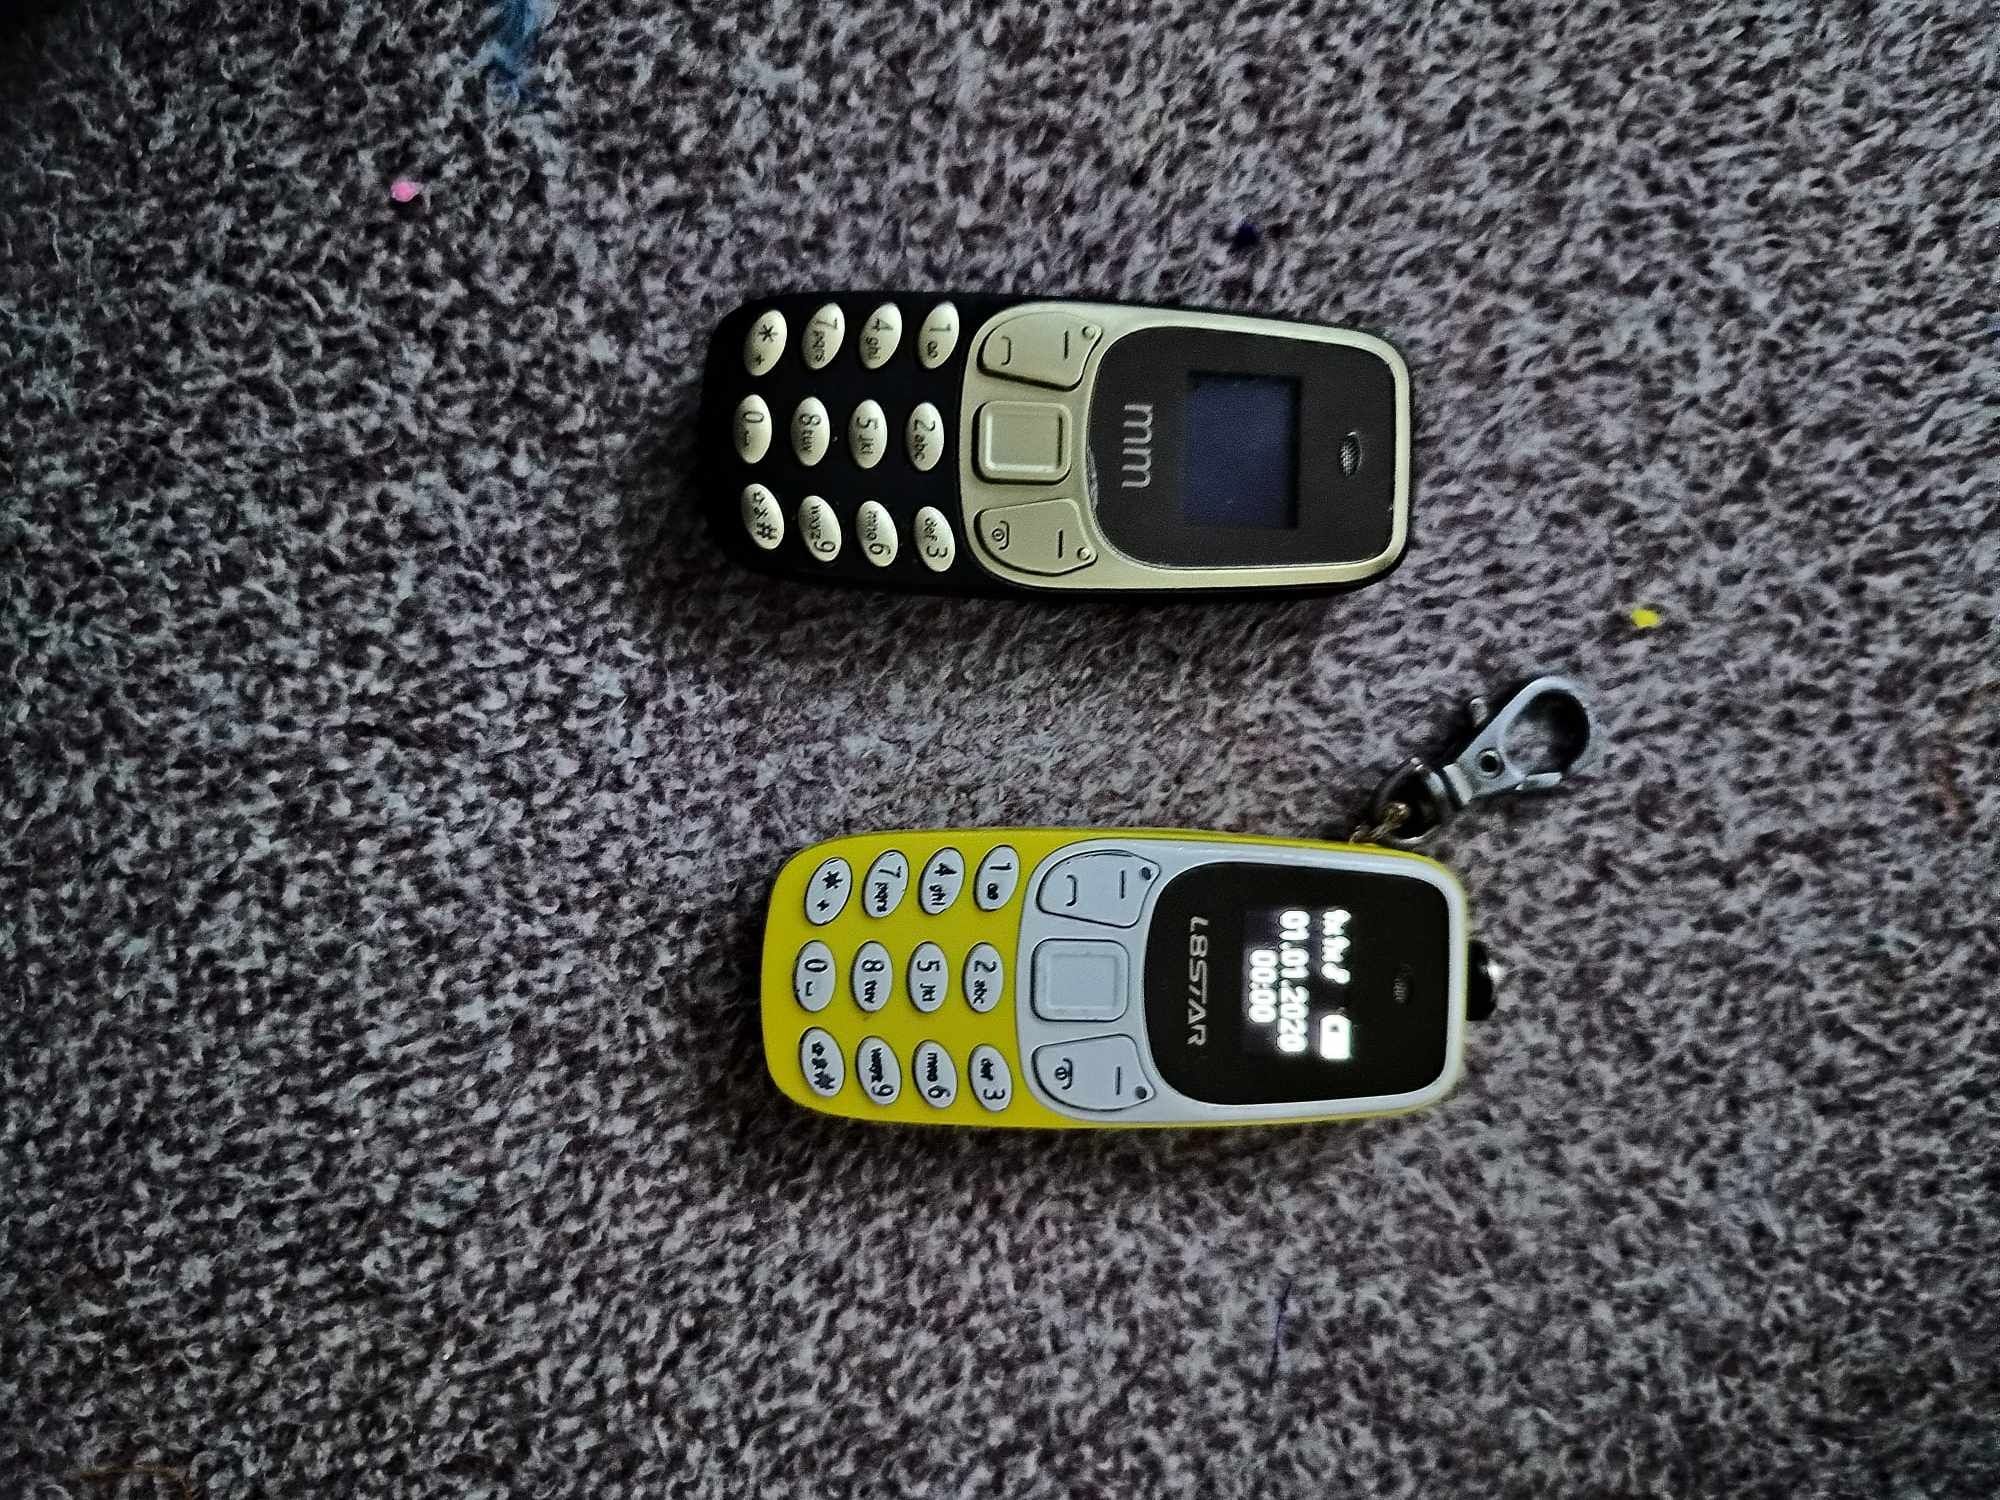 Nokia 3110 in miniatura!